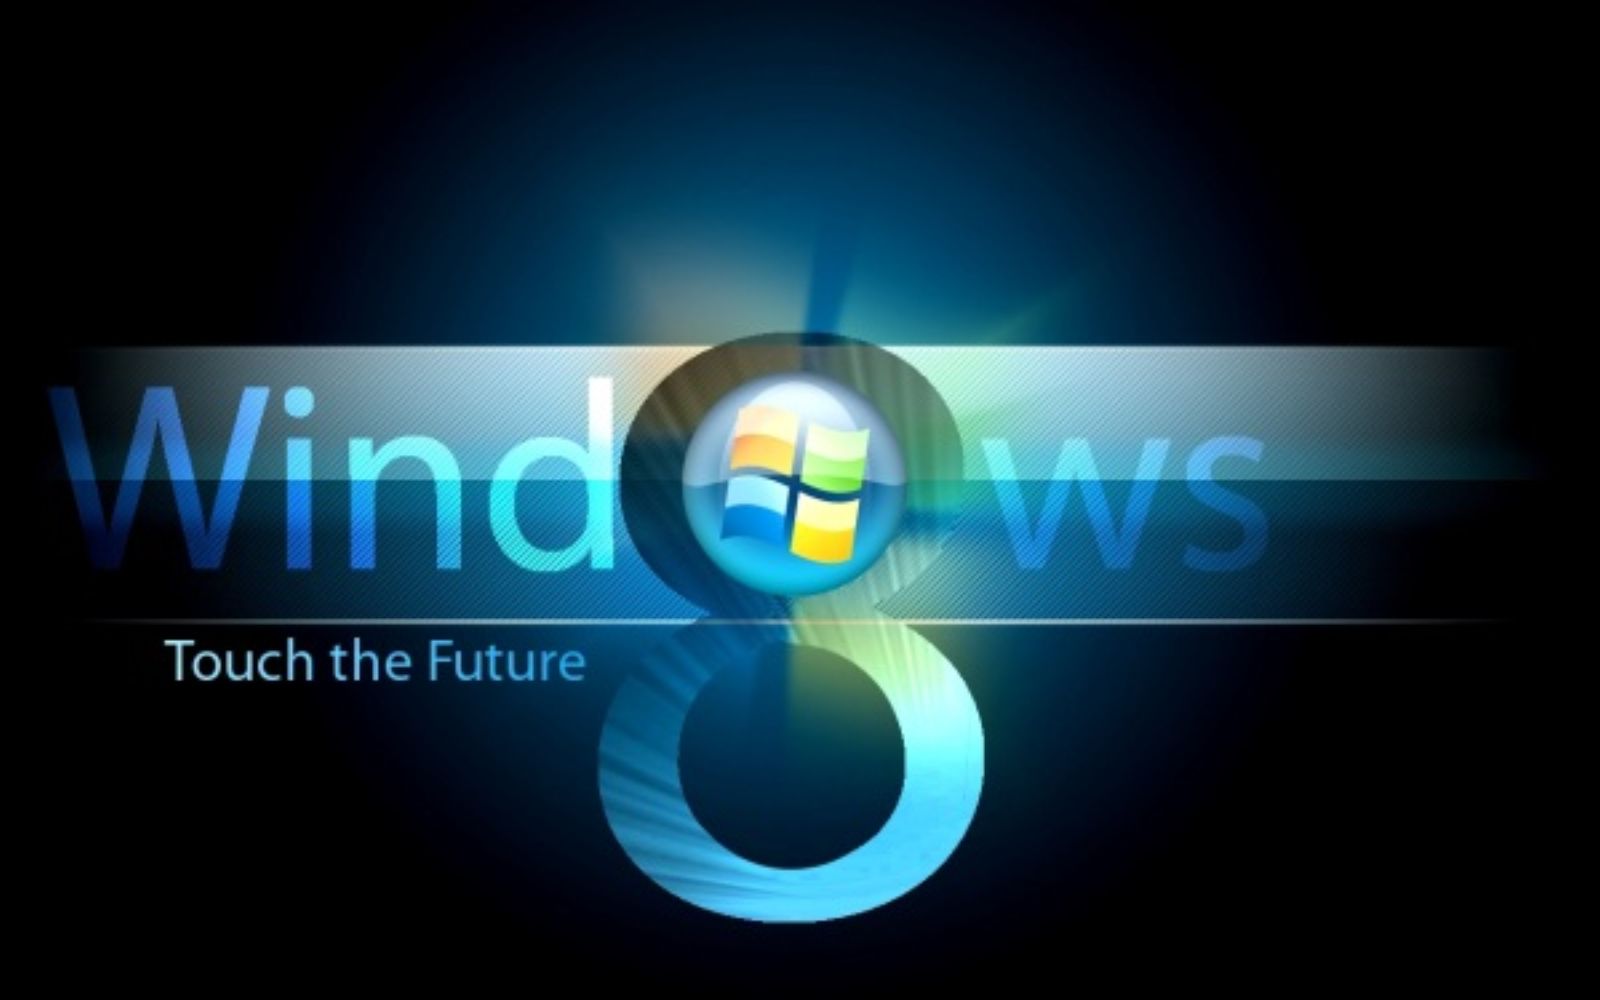 Windows 8 Wallpaper Hd Free Download